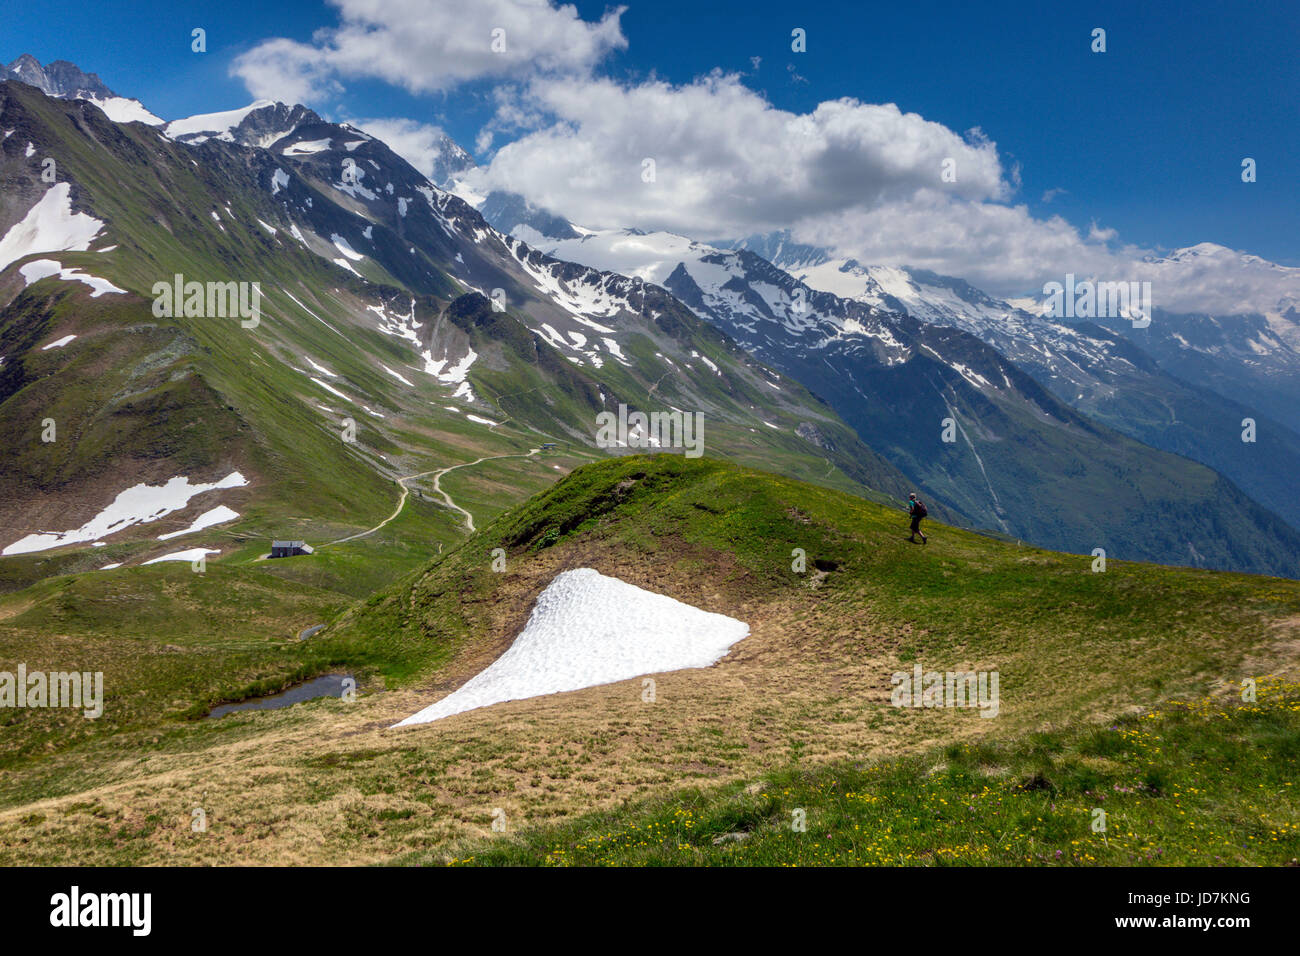 Femmina Lone walker alta sopra la valle di Chamonix Foto Stock